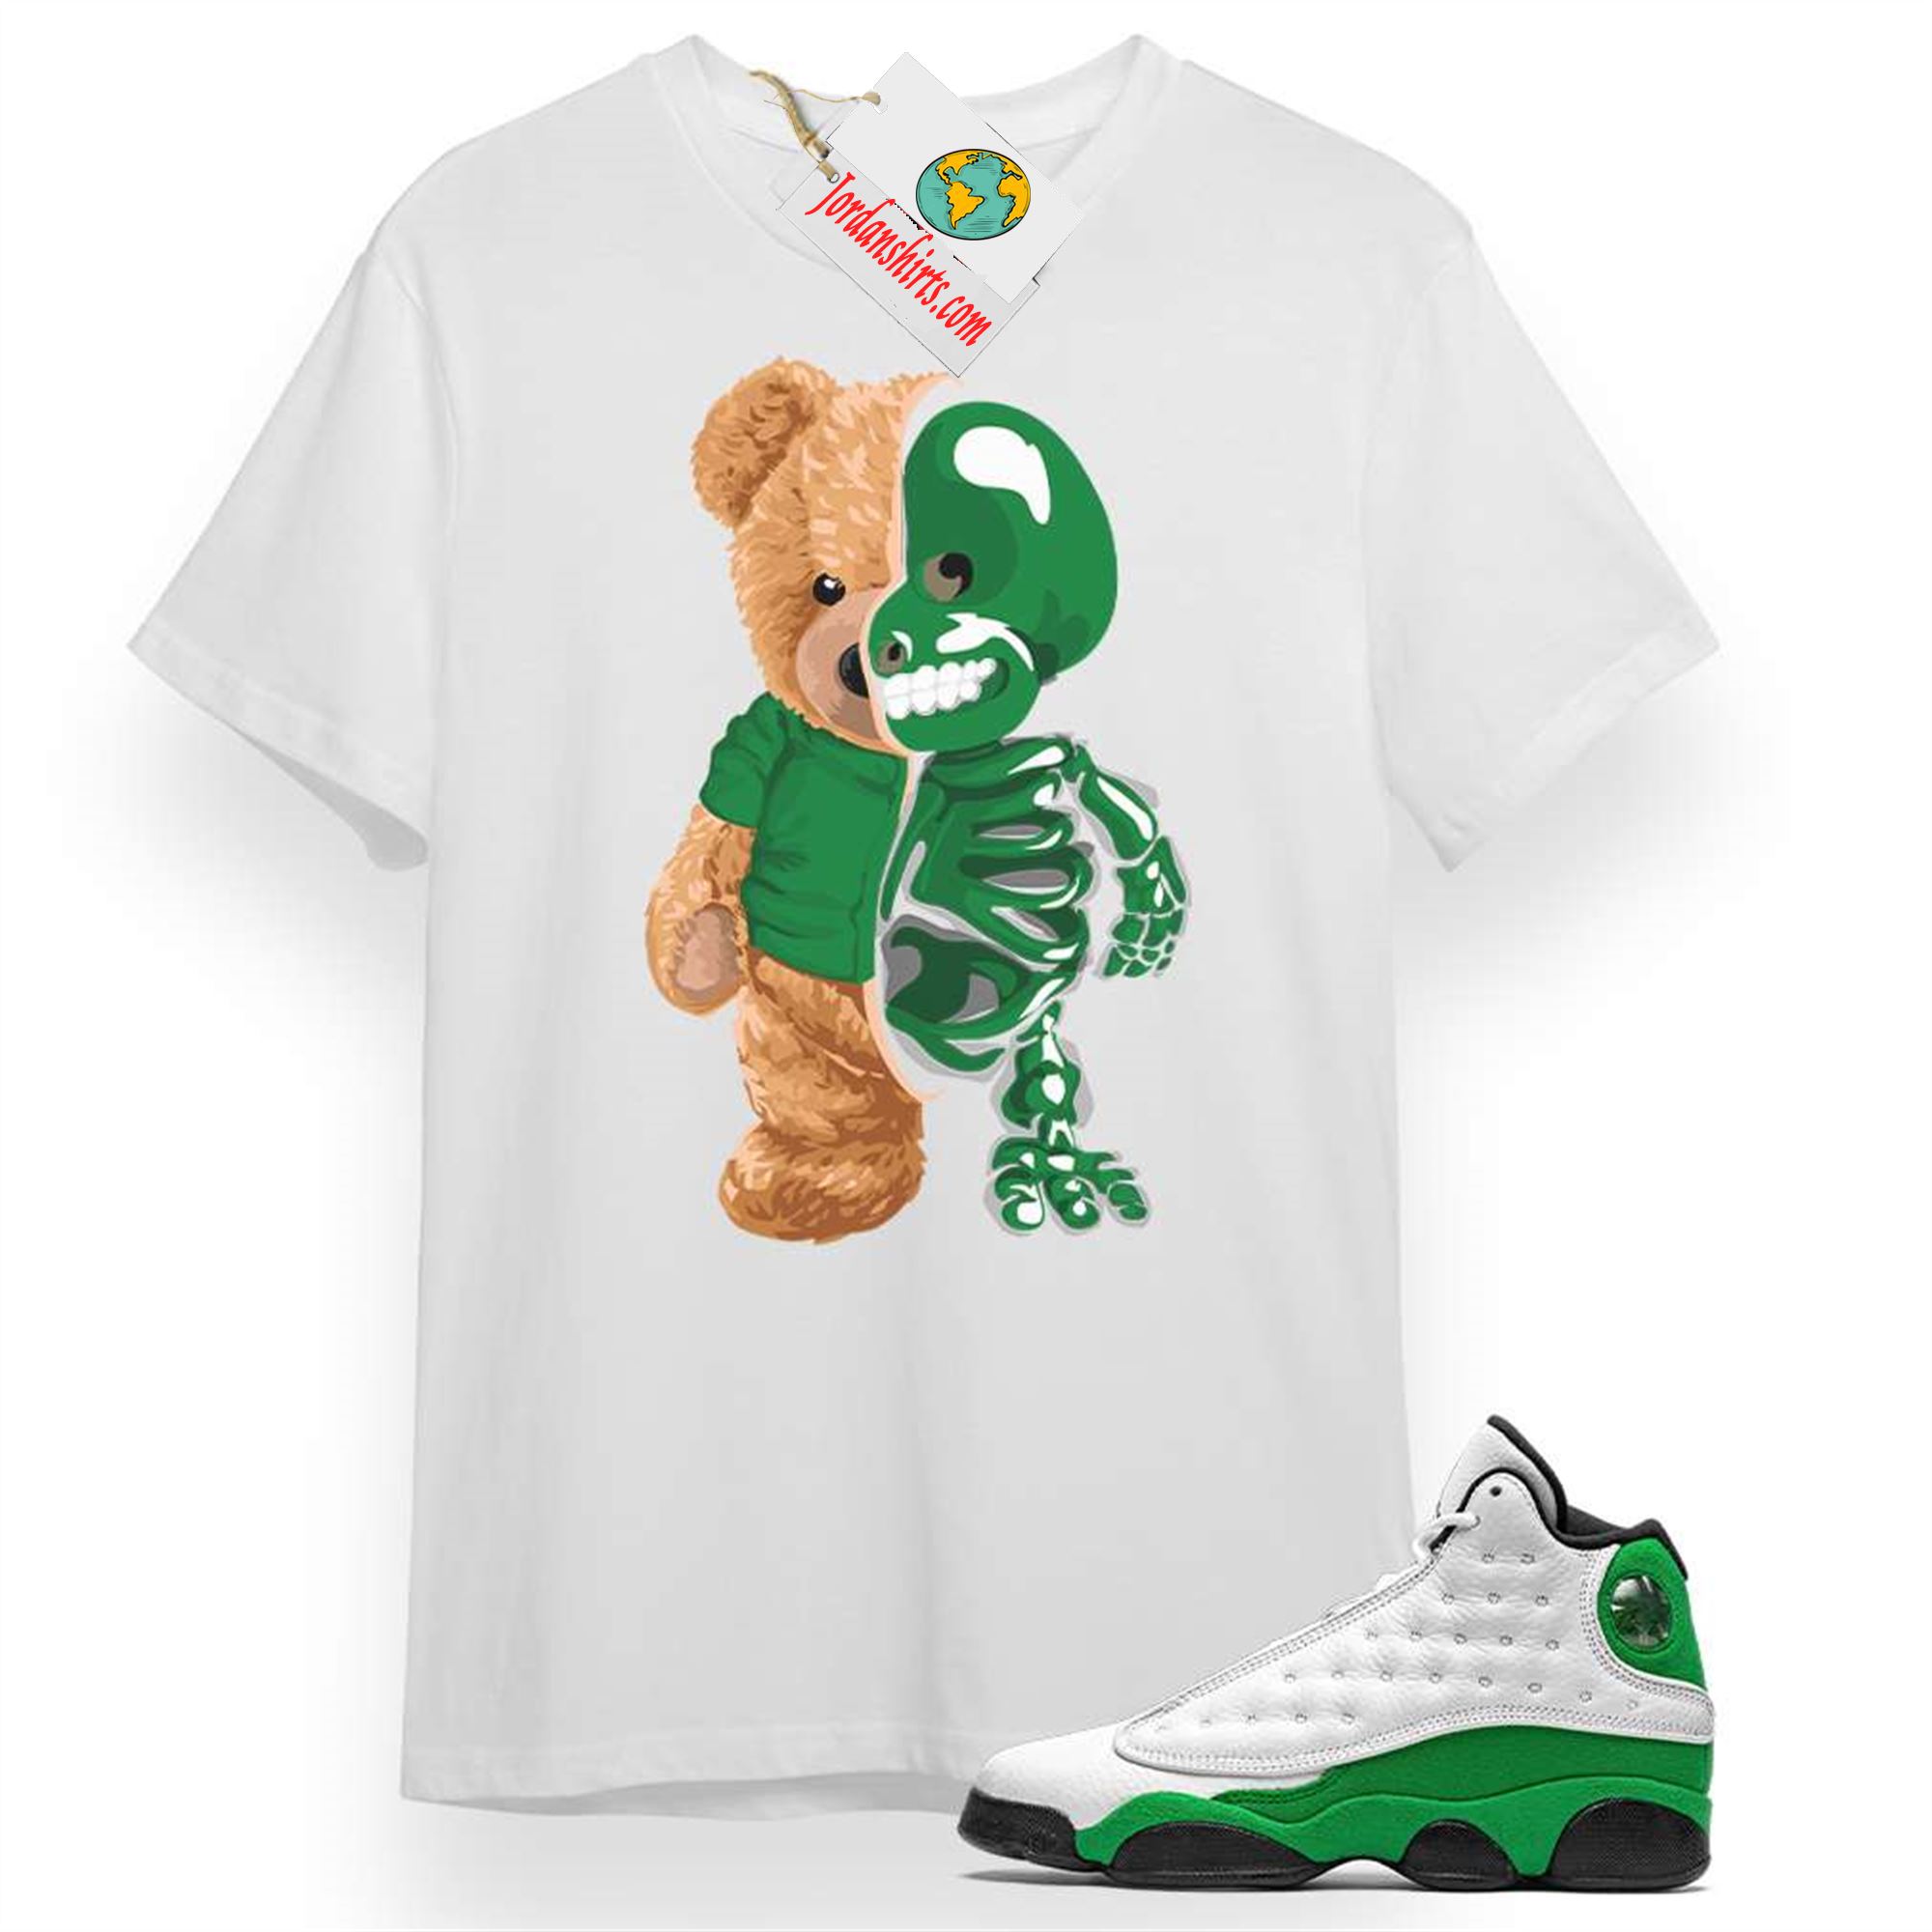 Jordan 13 Shirt, Teddy Bear Terminator White T-shirt Air Jordan 13 Lucky Green 13s Plus Size Up To 5xl